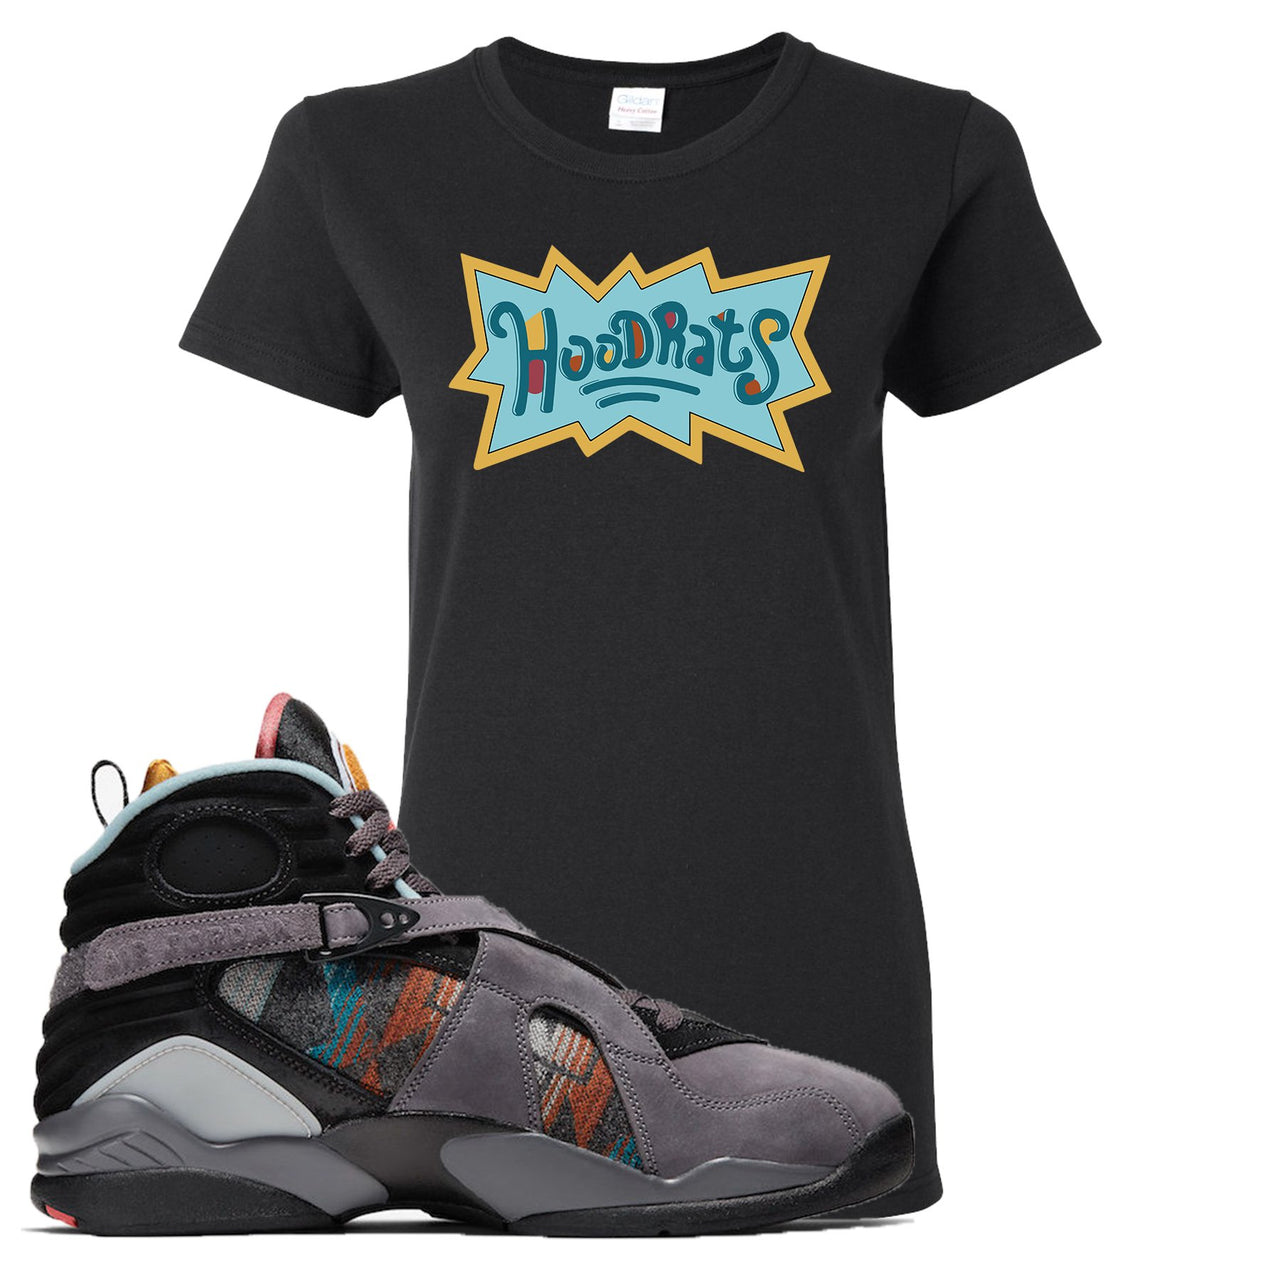 Jordan 8 N7 Pendleton Hood Rats Black Sneaker Hook Up Women's T-Shirt